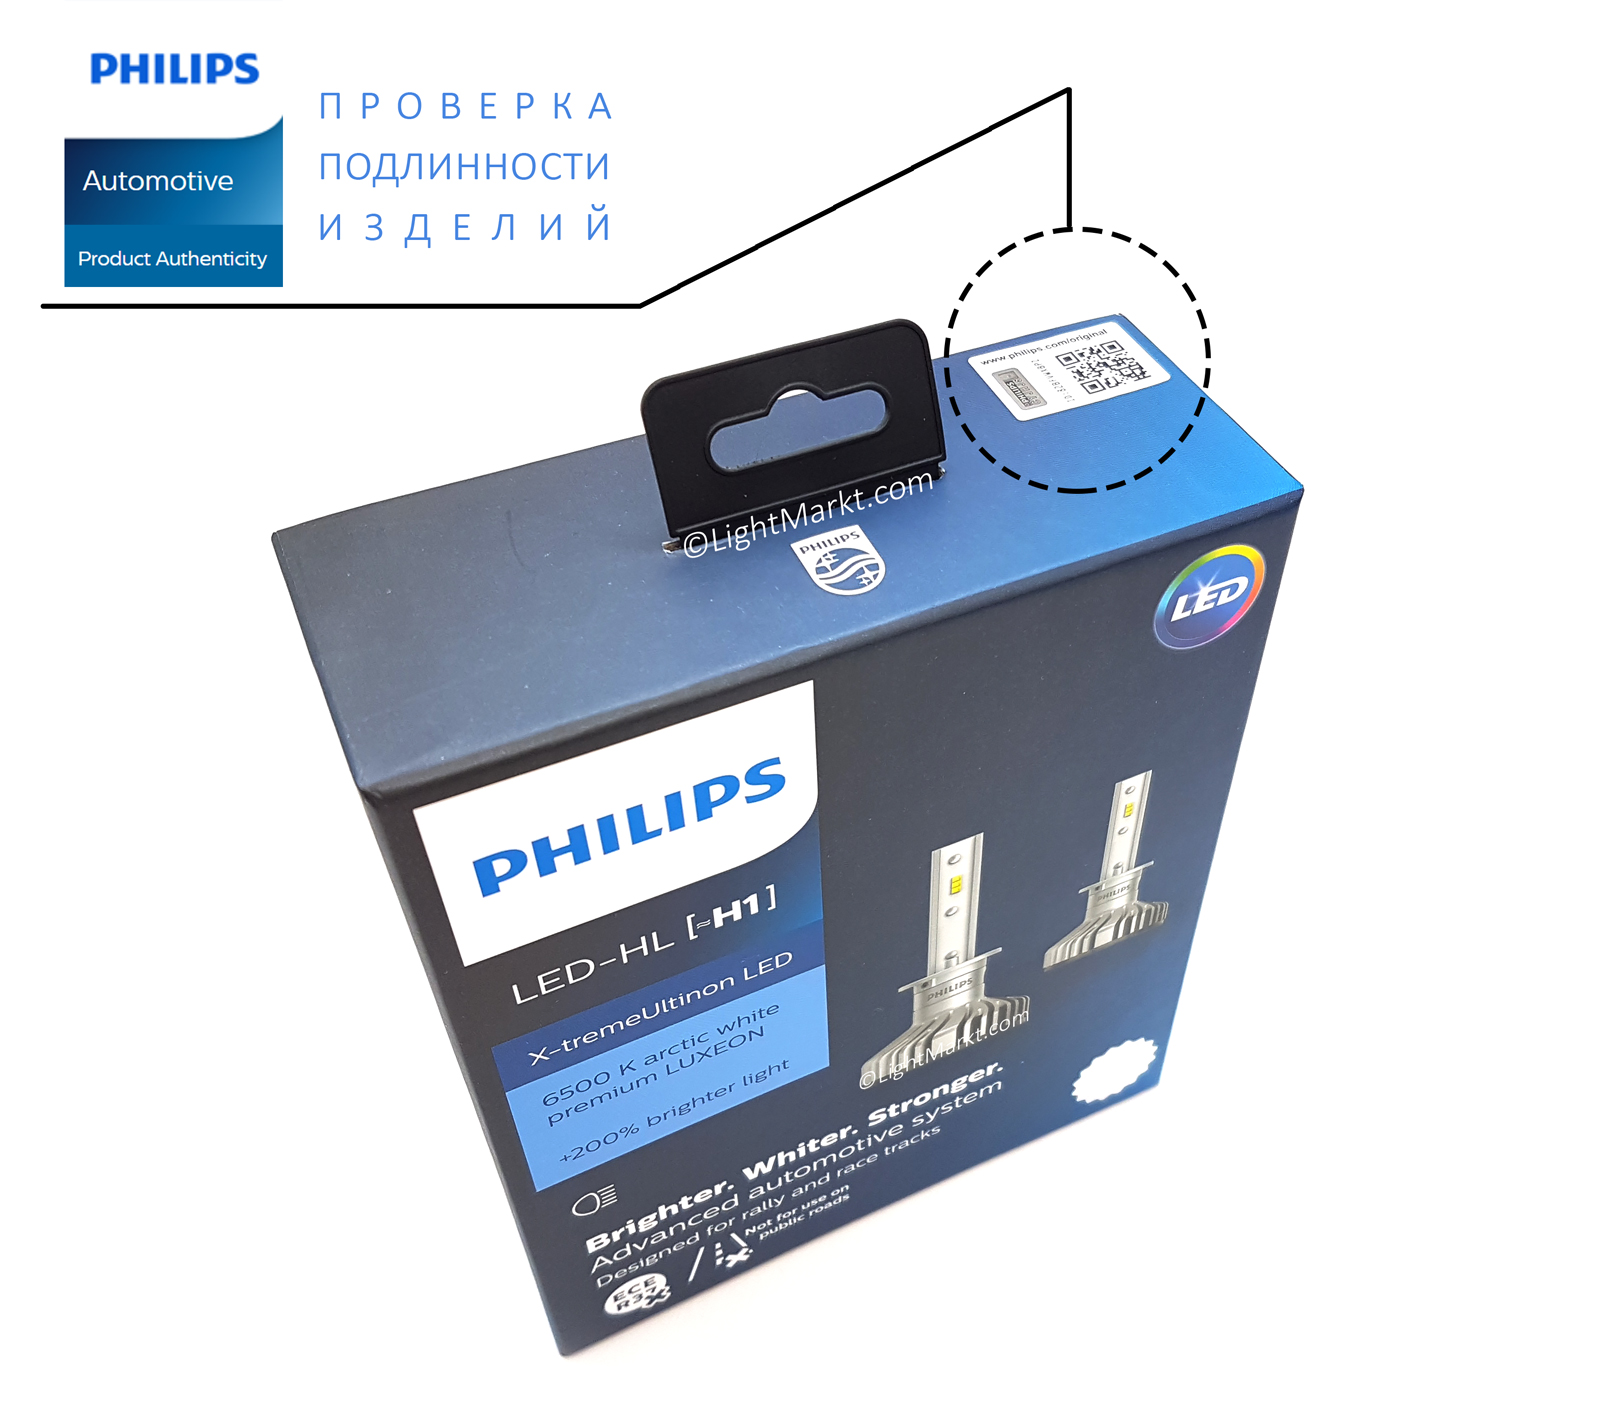 Philips X-tremeUltinon LED H1 6500K (2 шт.) 11258XUX2